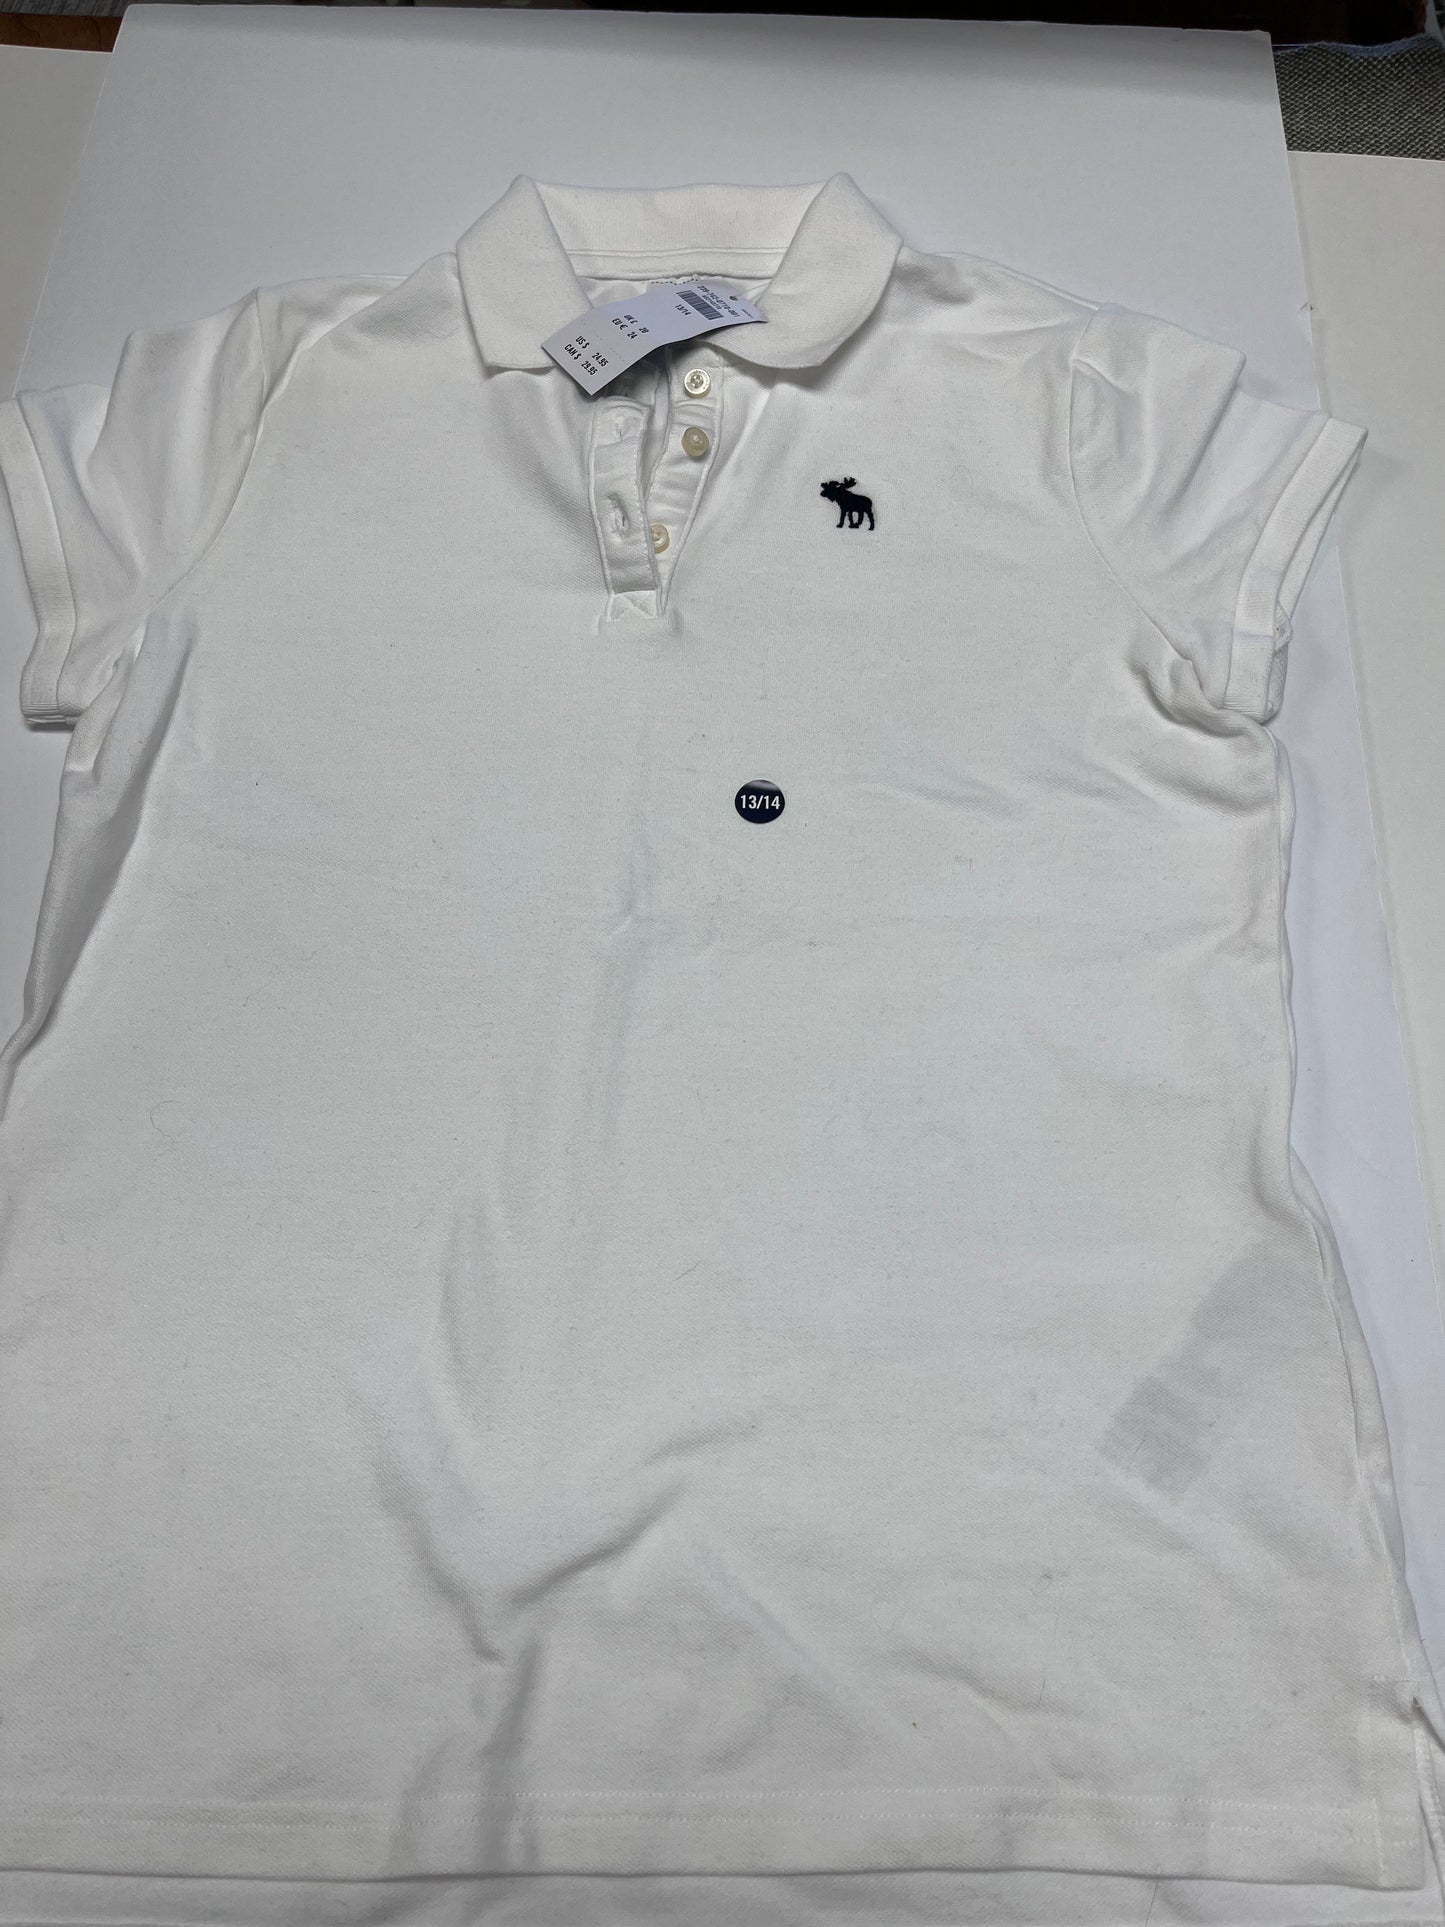 13-14 New Abercrombie Polo Shirt